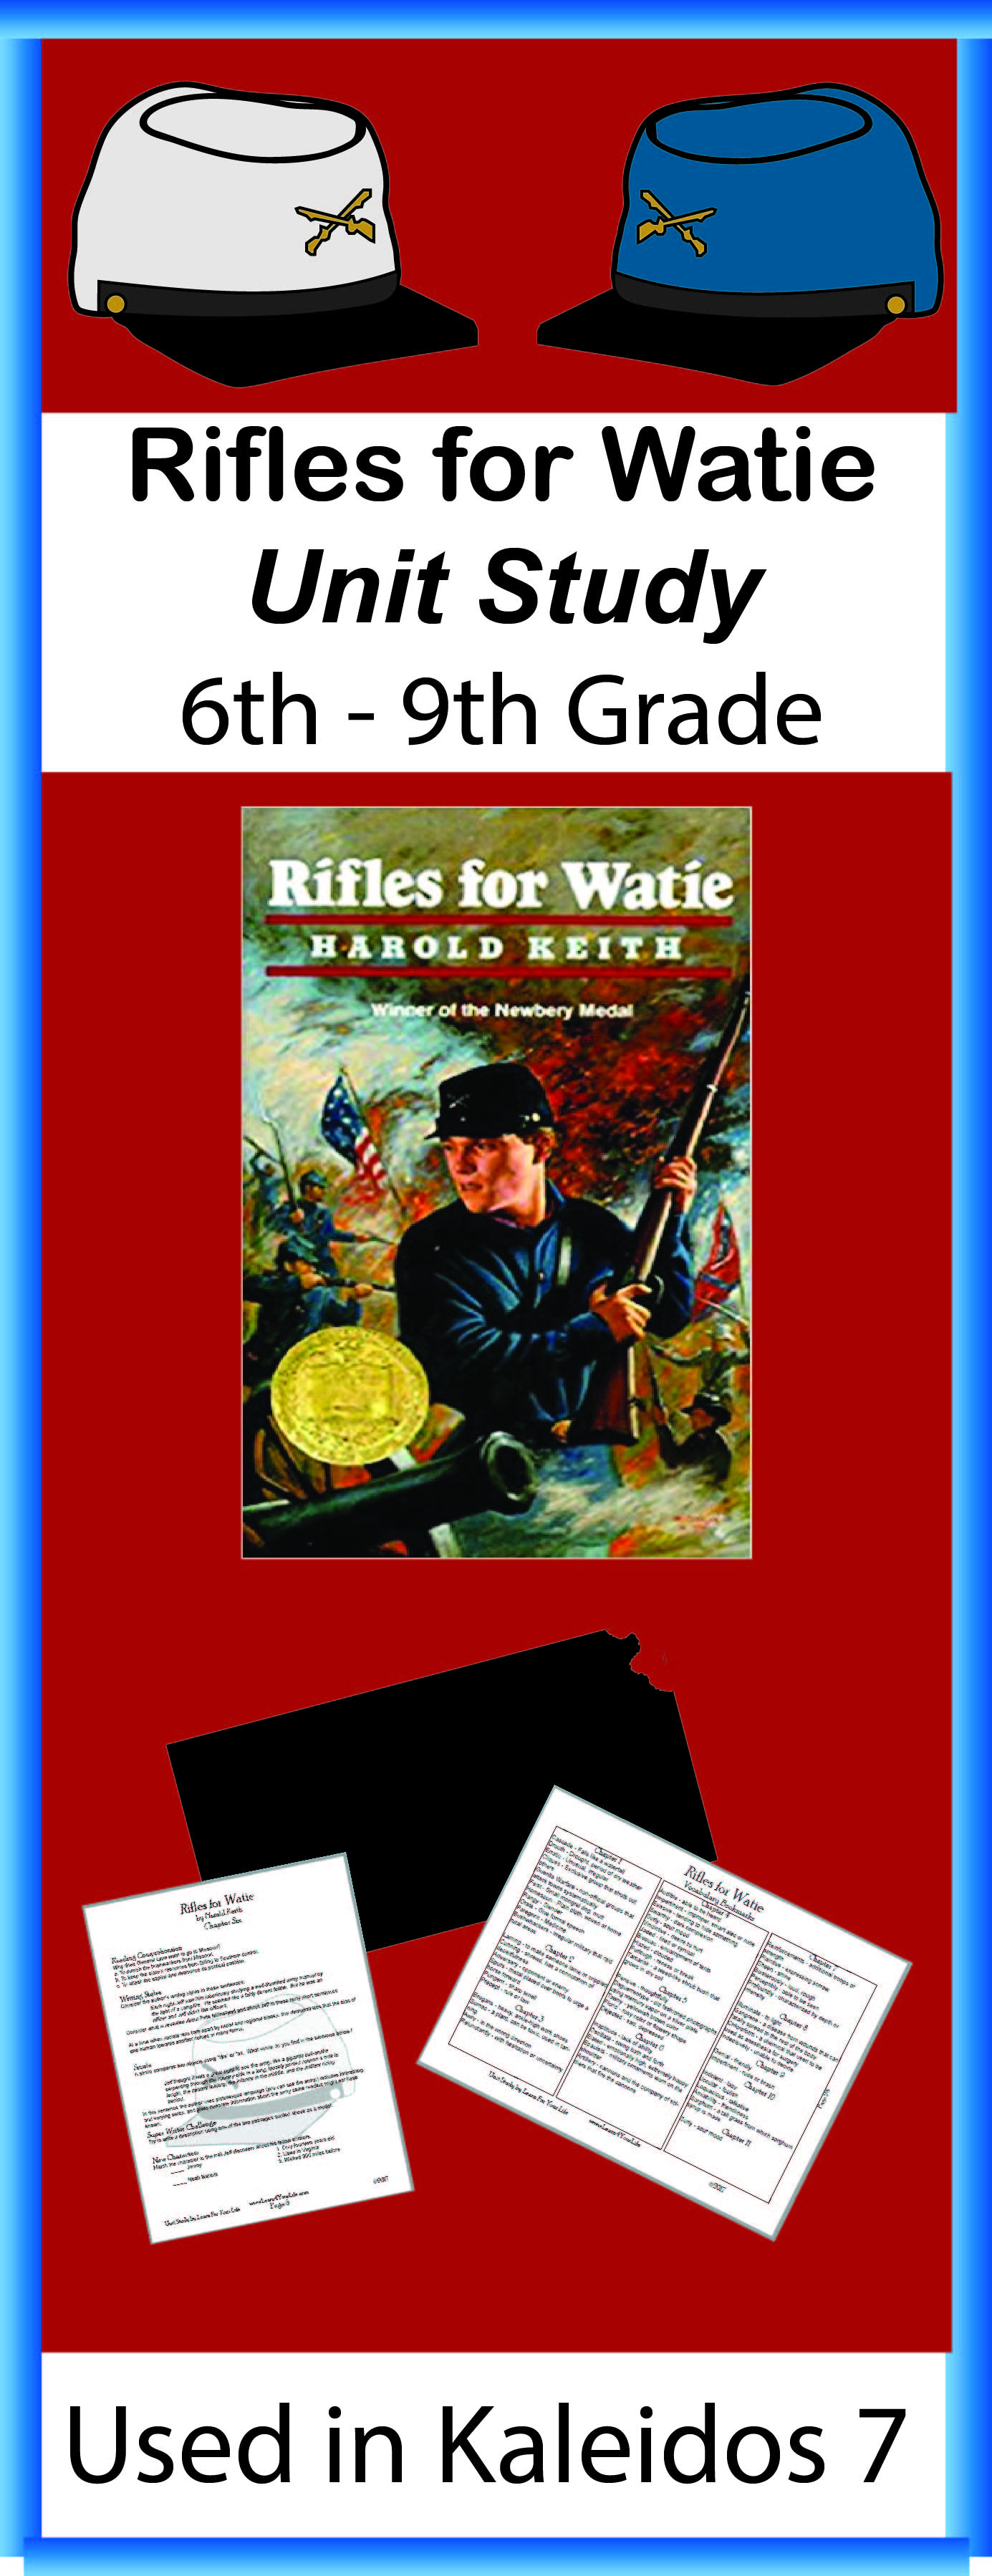 Rifles for Watie Unit Study Poster